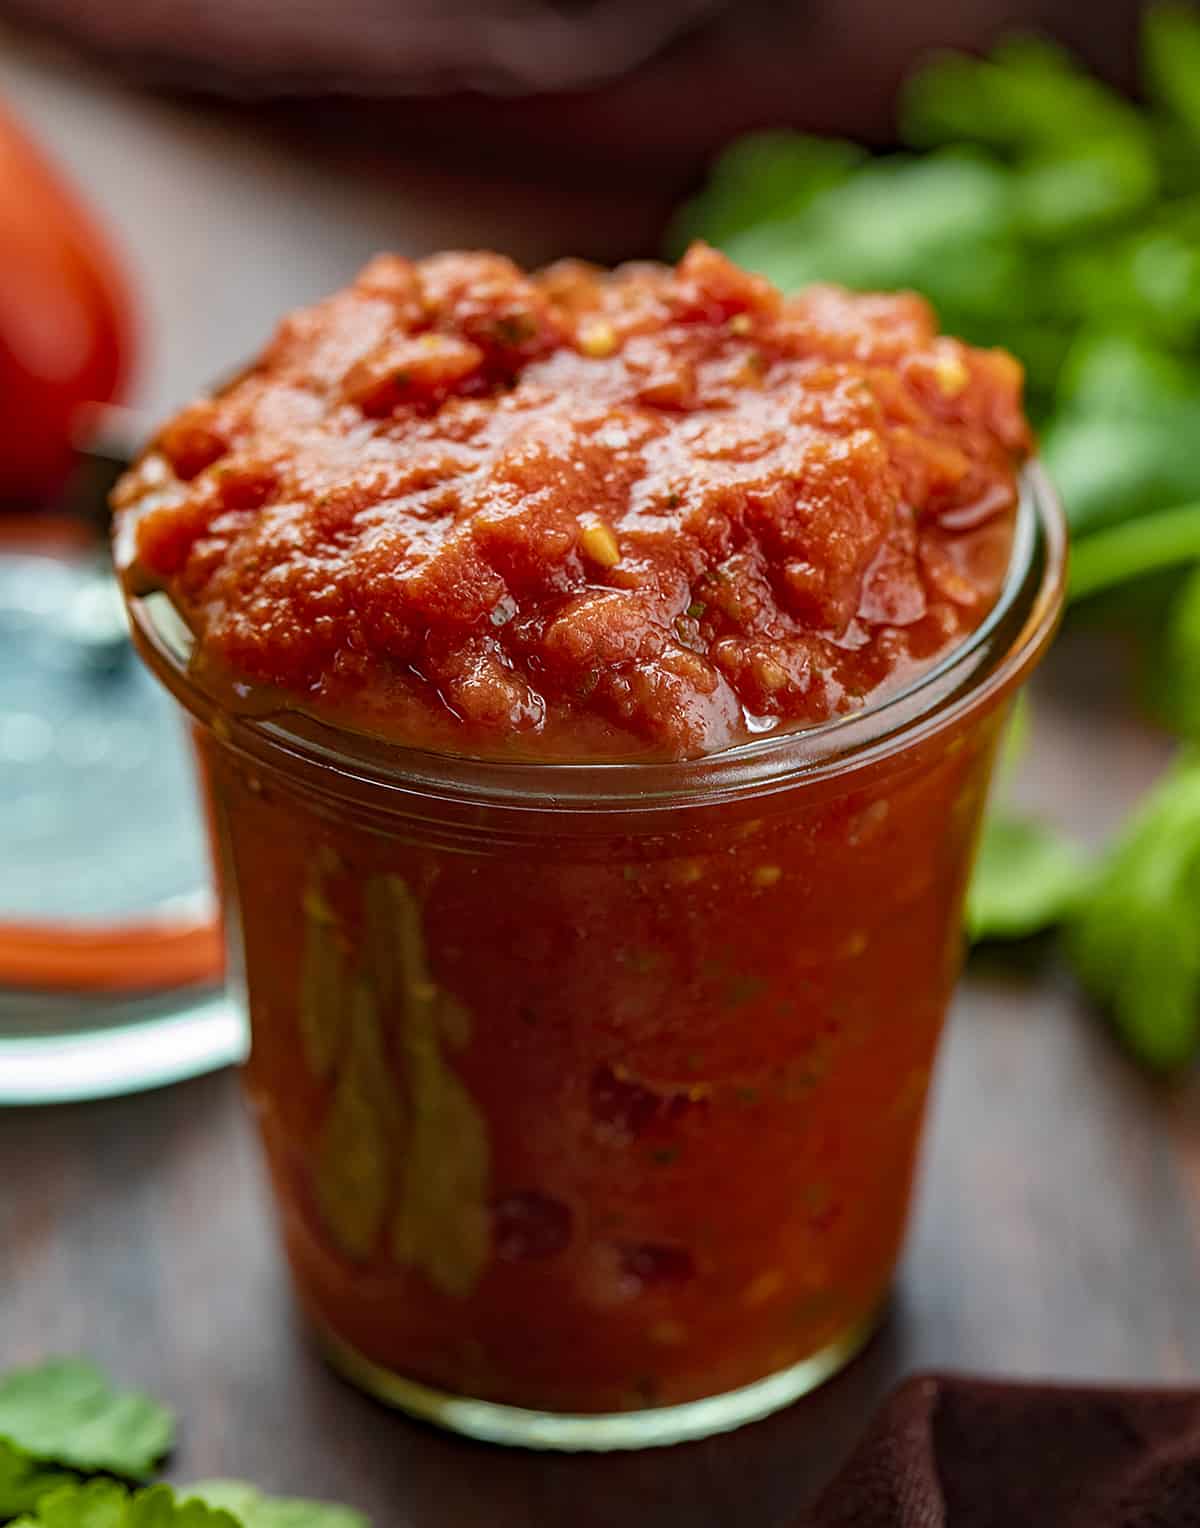 Jar of Homemade Marinara. Sauces, Marinara, How to Make Marinara, Best Marinara, Easy Marinara, Dip, Appetizers, i am homesteader, iamhomesteader